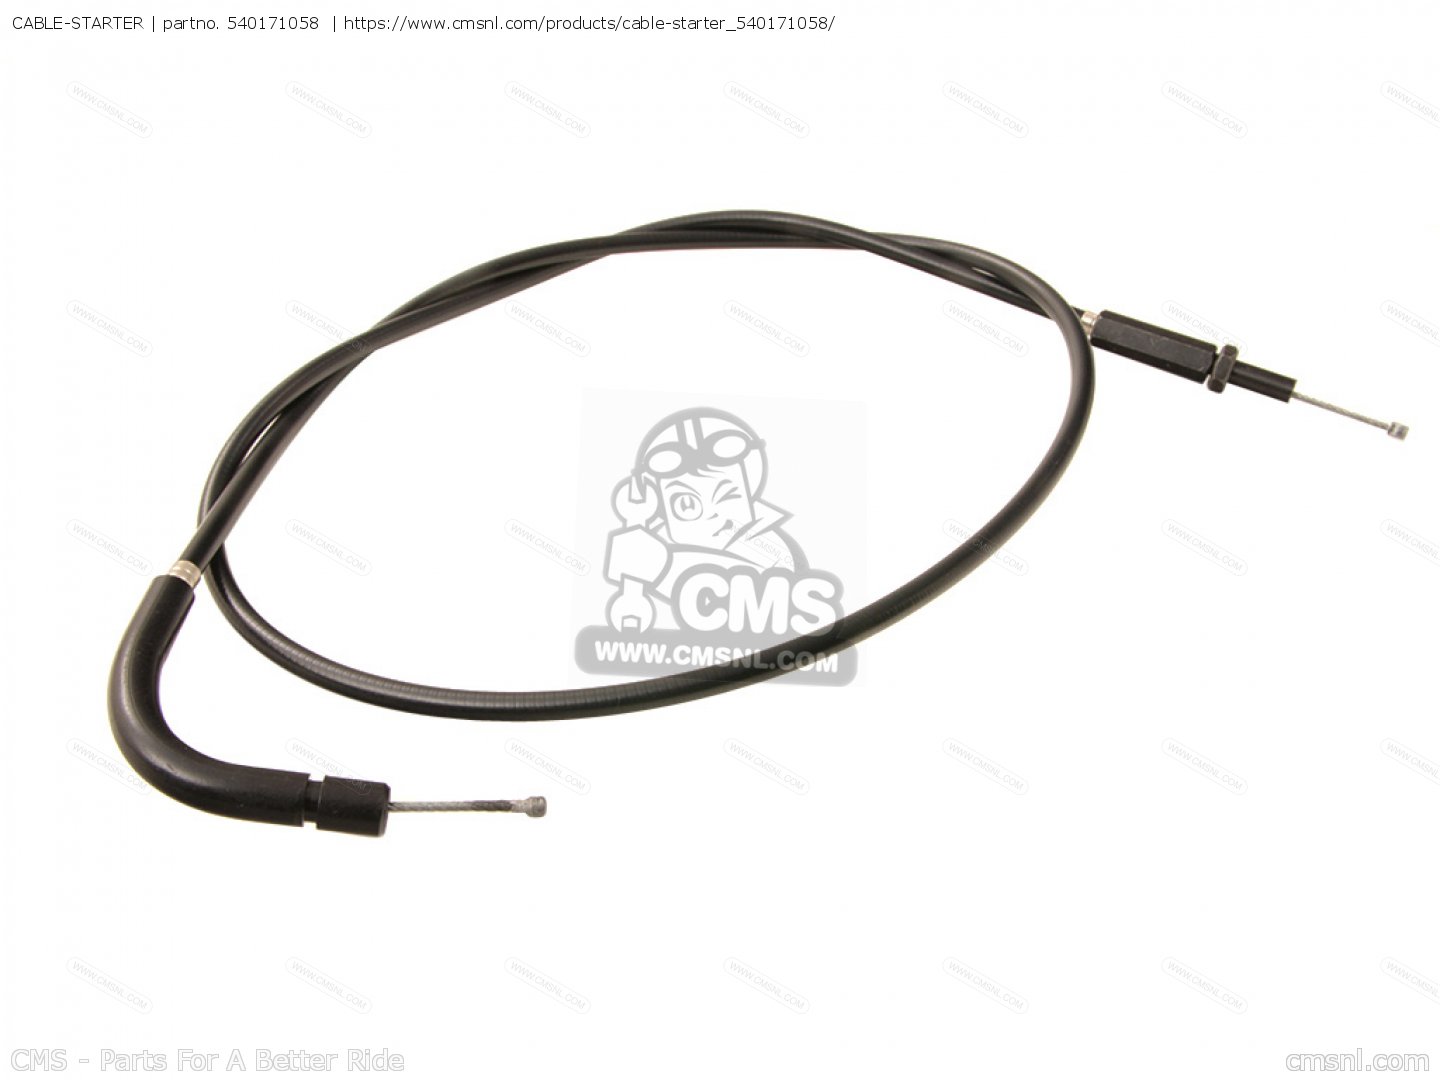 Kawasaki Cable-Starter 54017-1058 